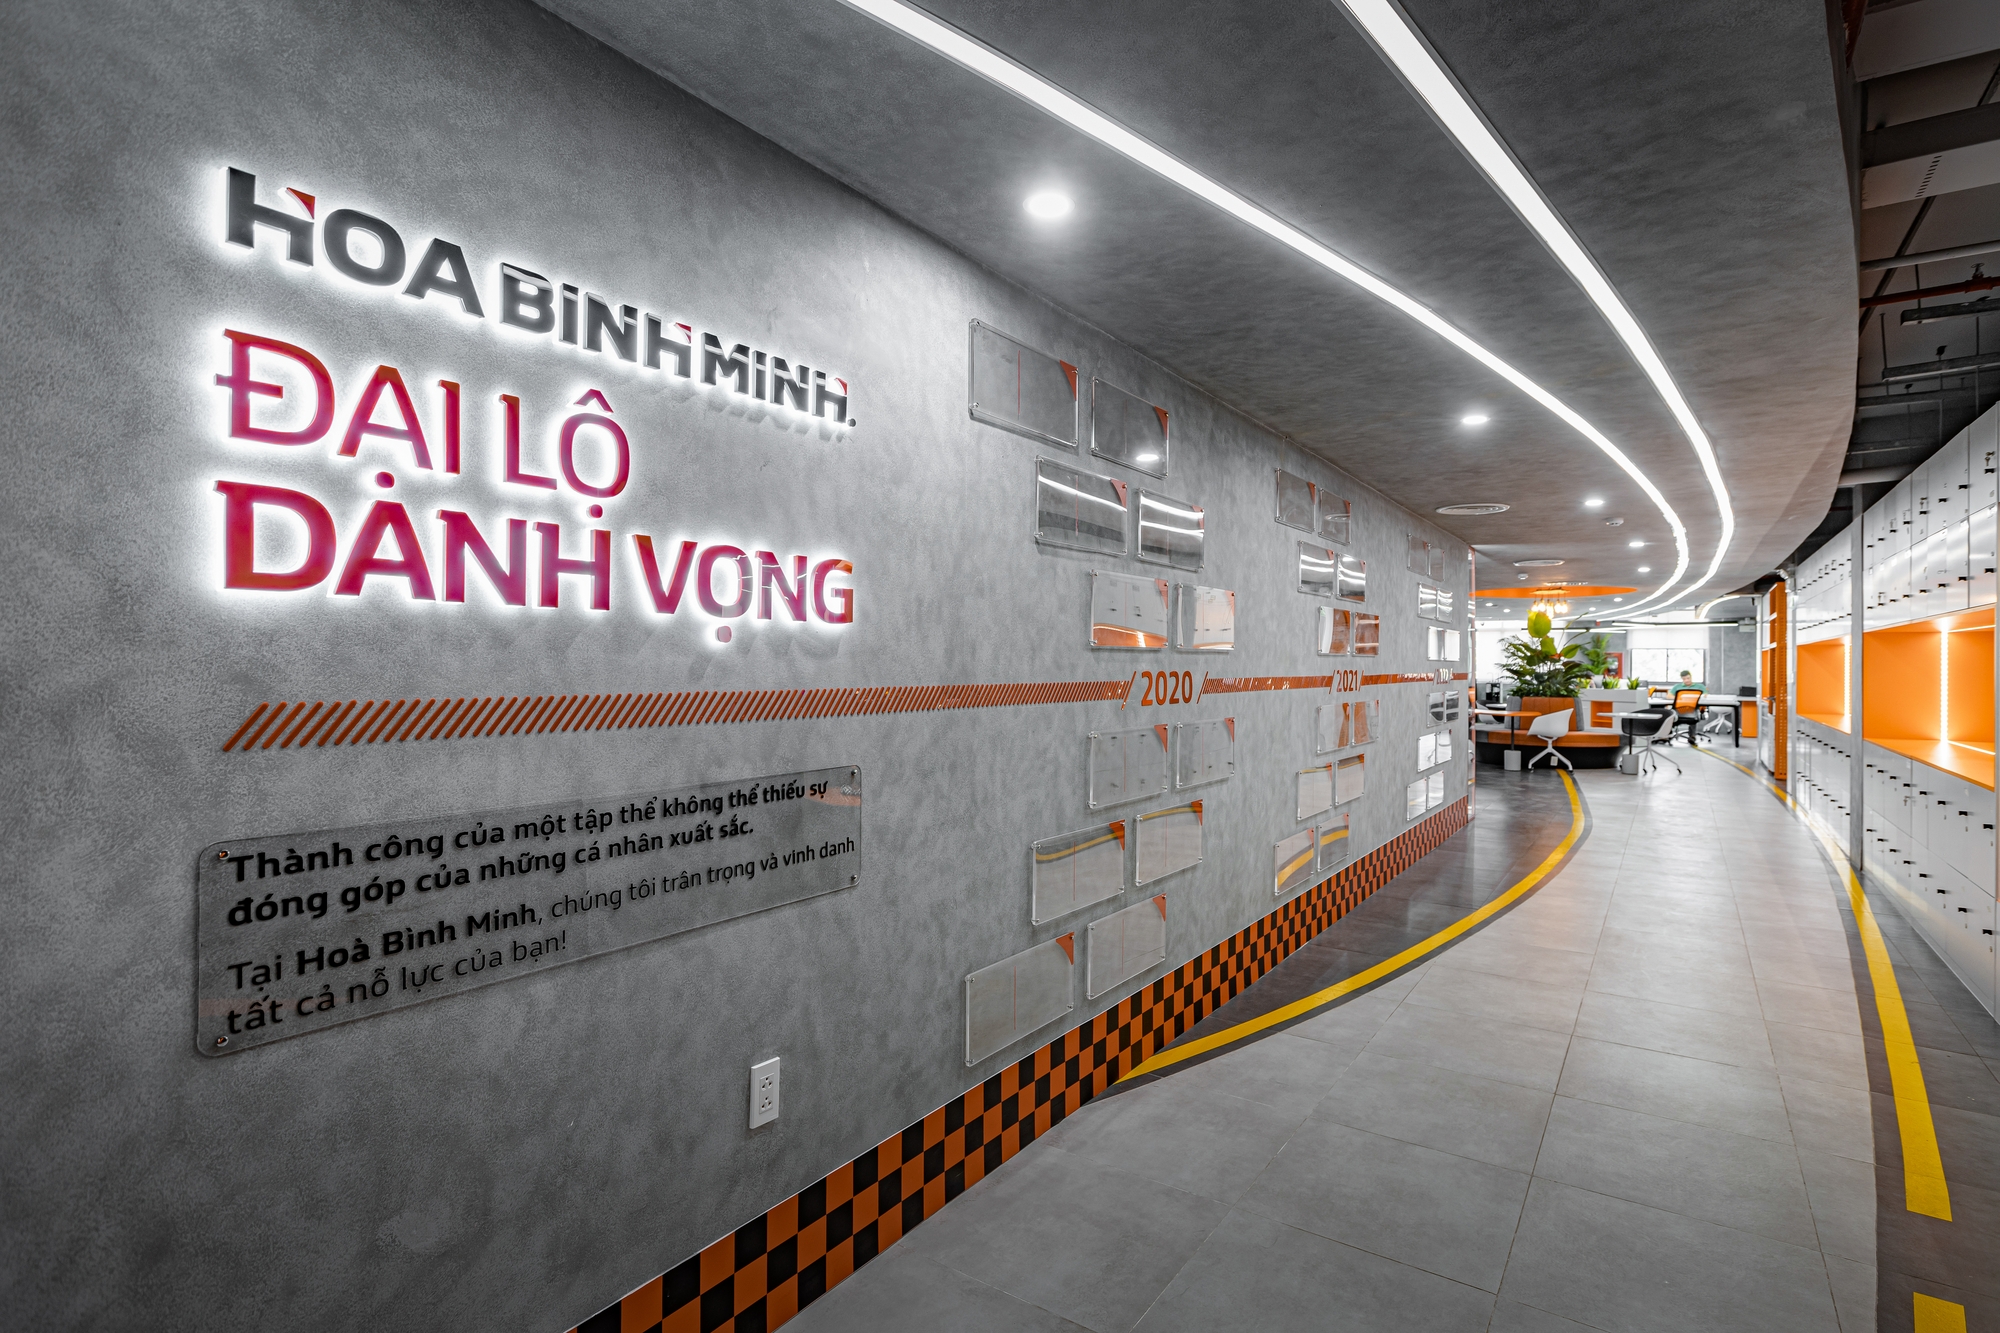 Hoa Binh Minh办事处——Dong Nai|ART-Arrakis | 建筑室内设计的创新与灵感